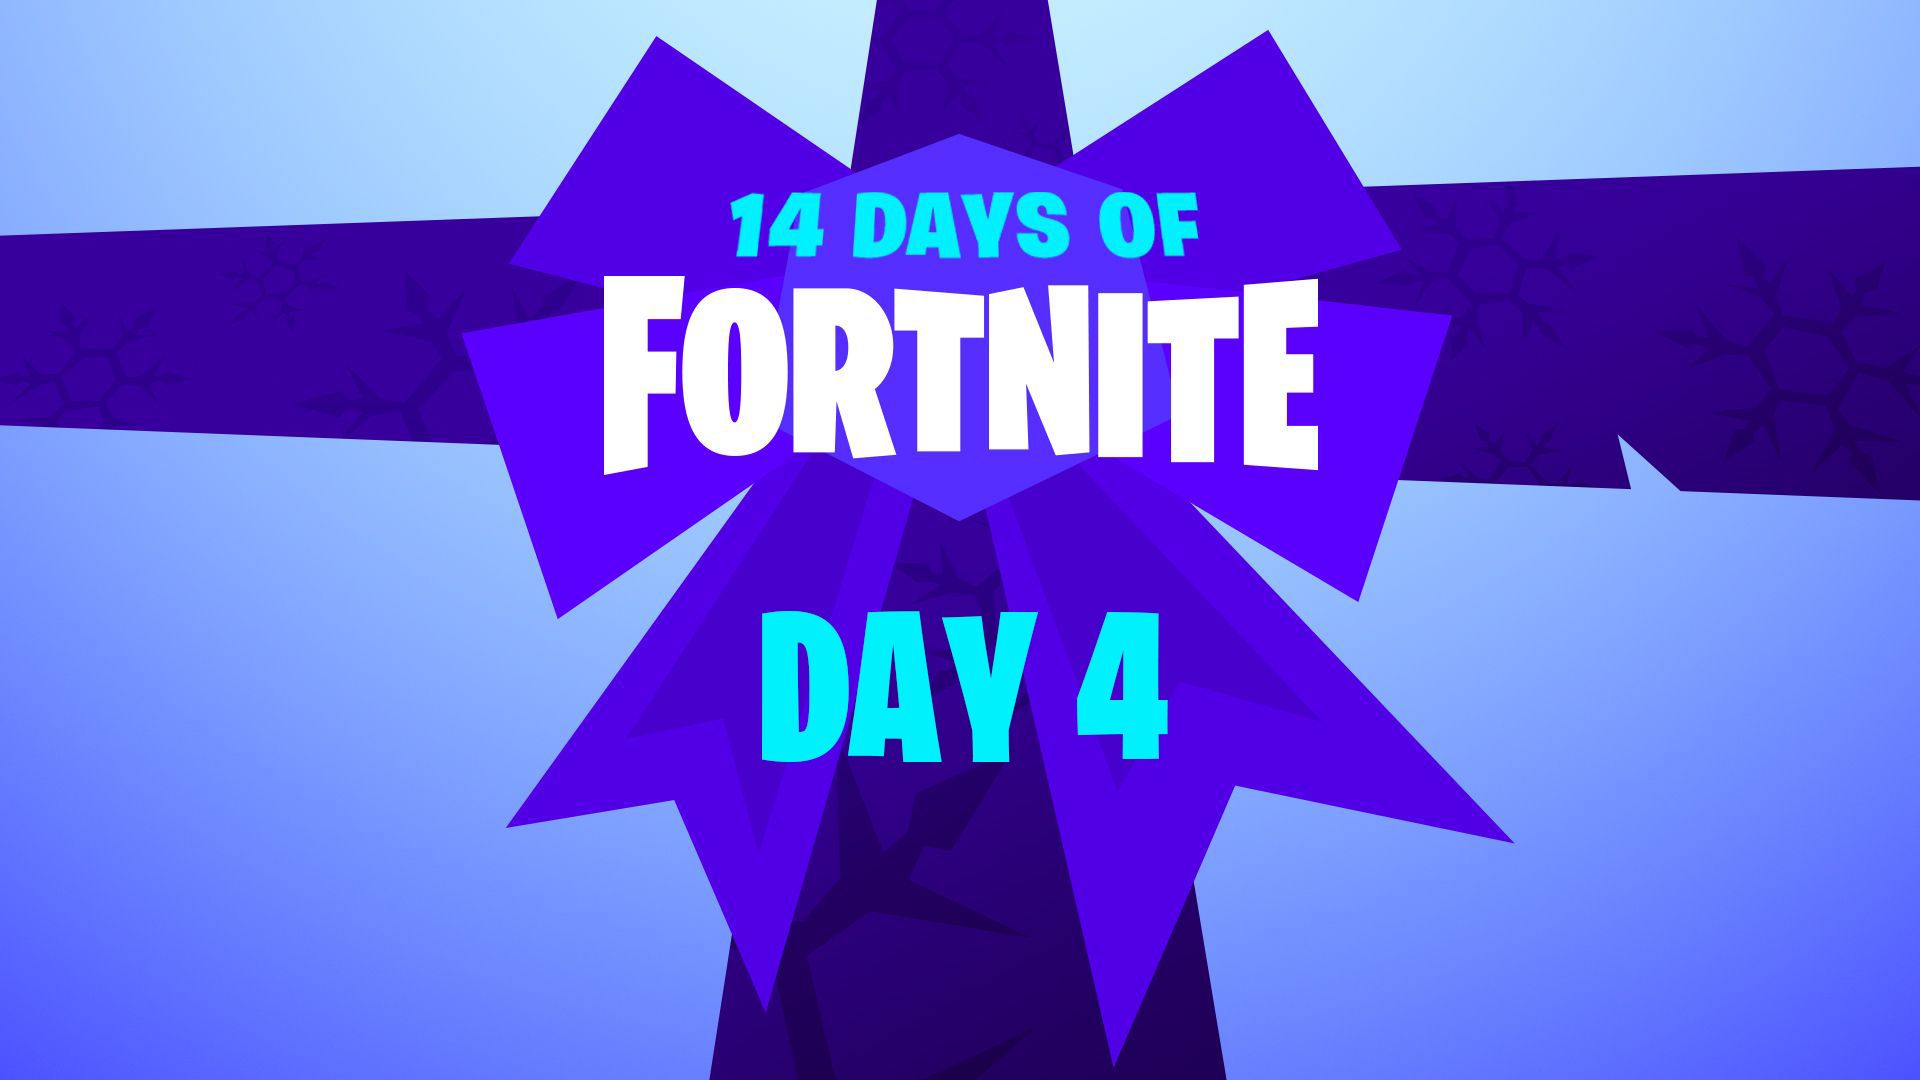 14 Days of Fortnite - Day 4 challenge & reward